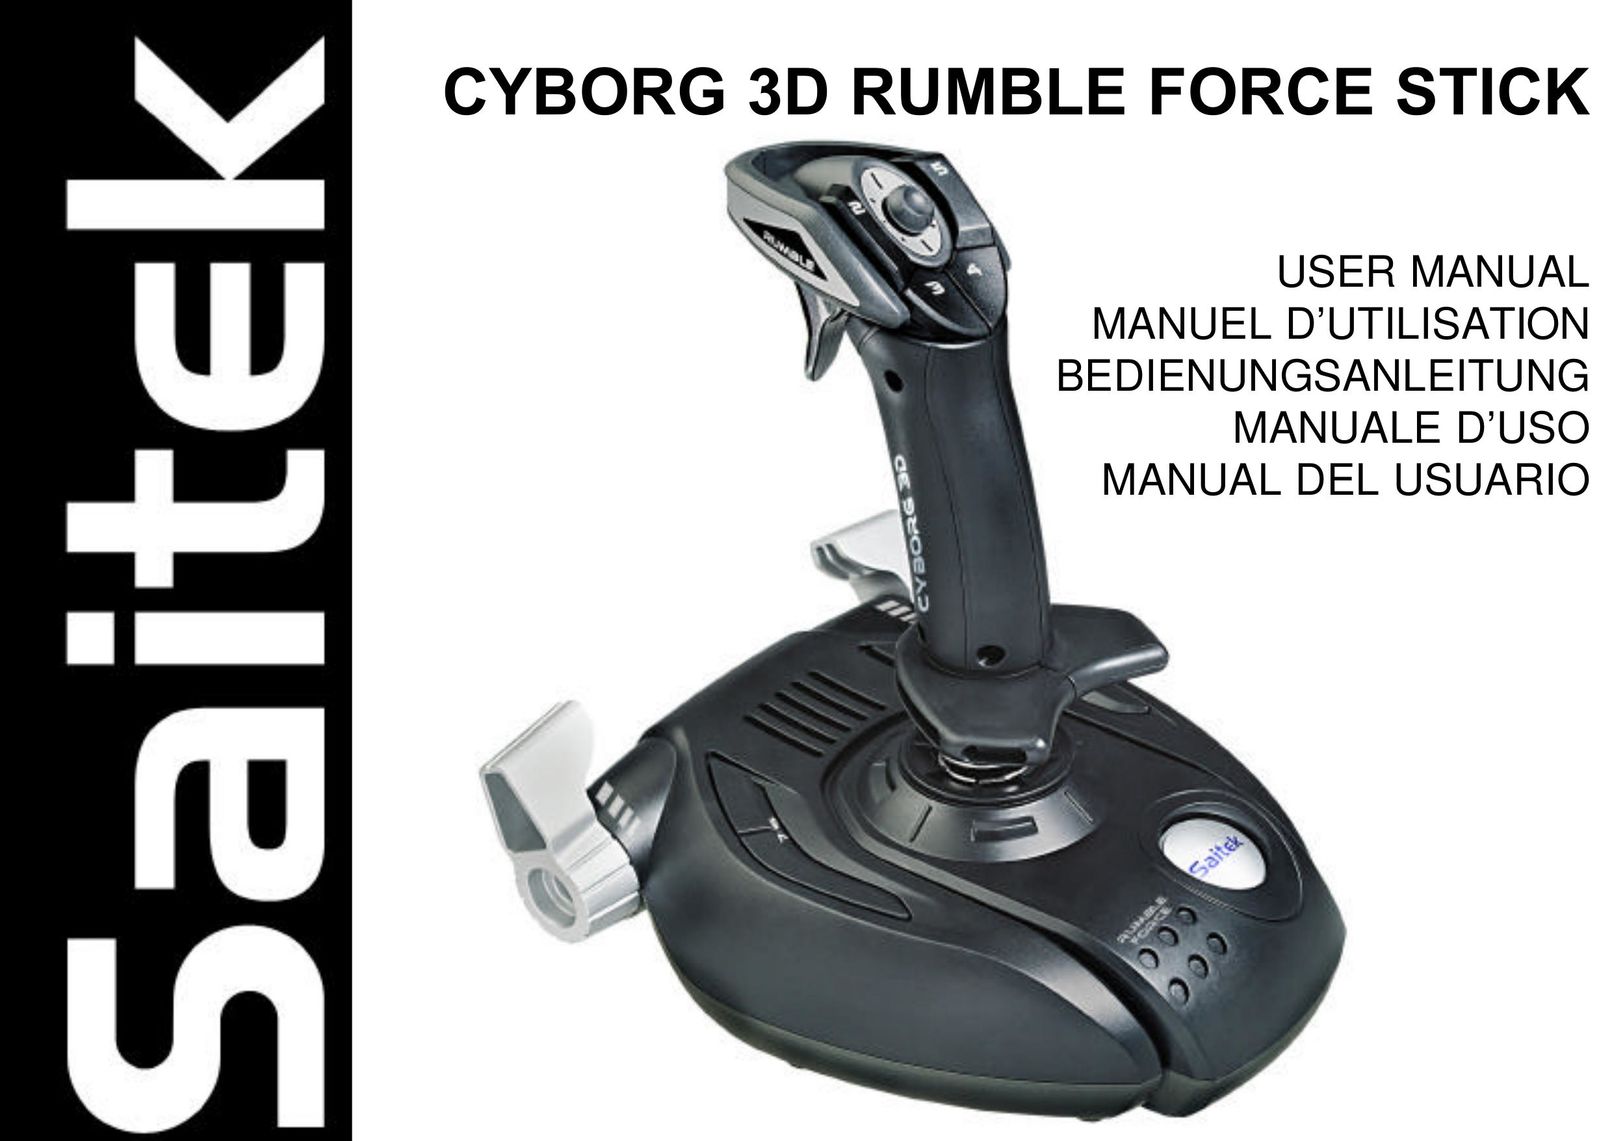 Saitek Cyborg 3D Video Game Controller User Manual